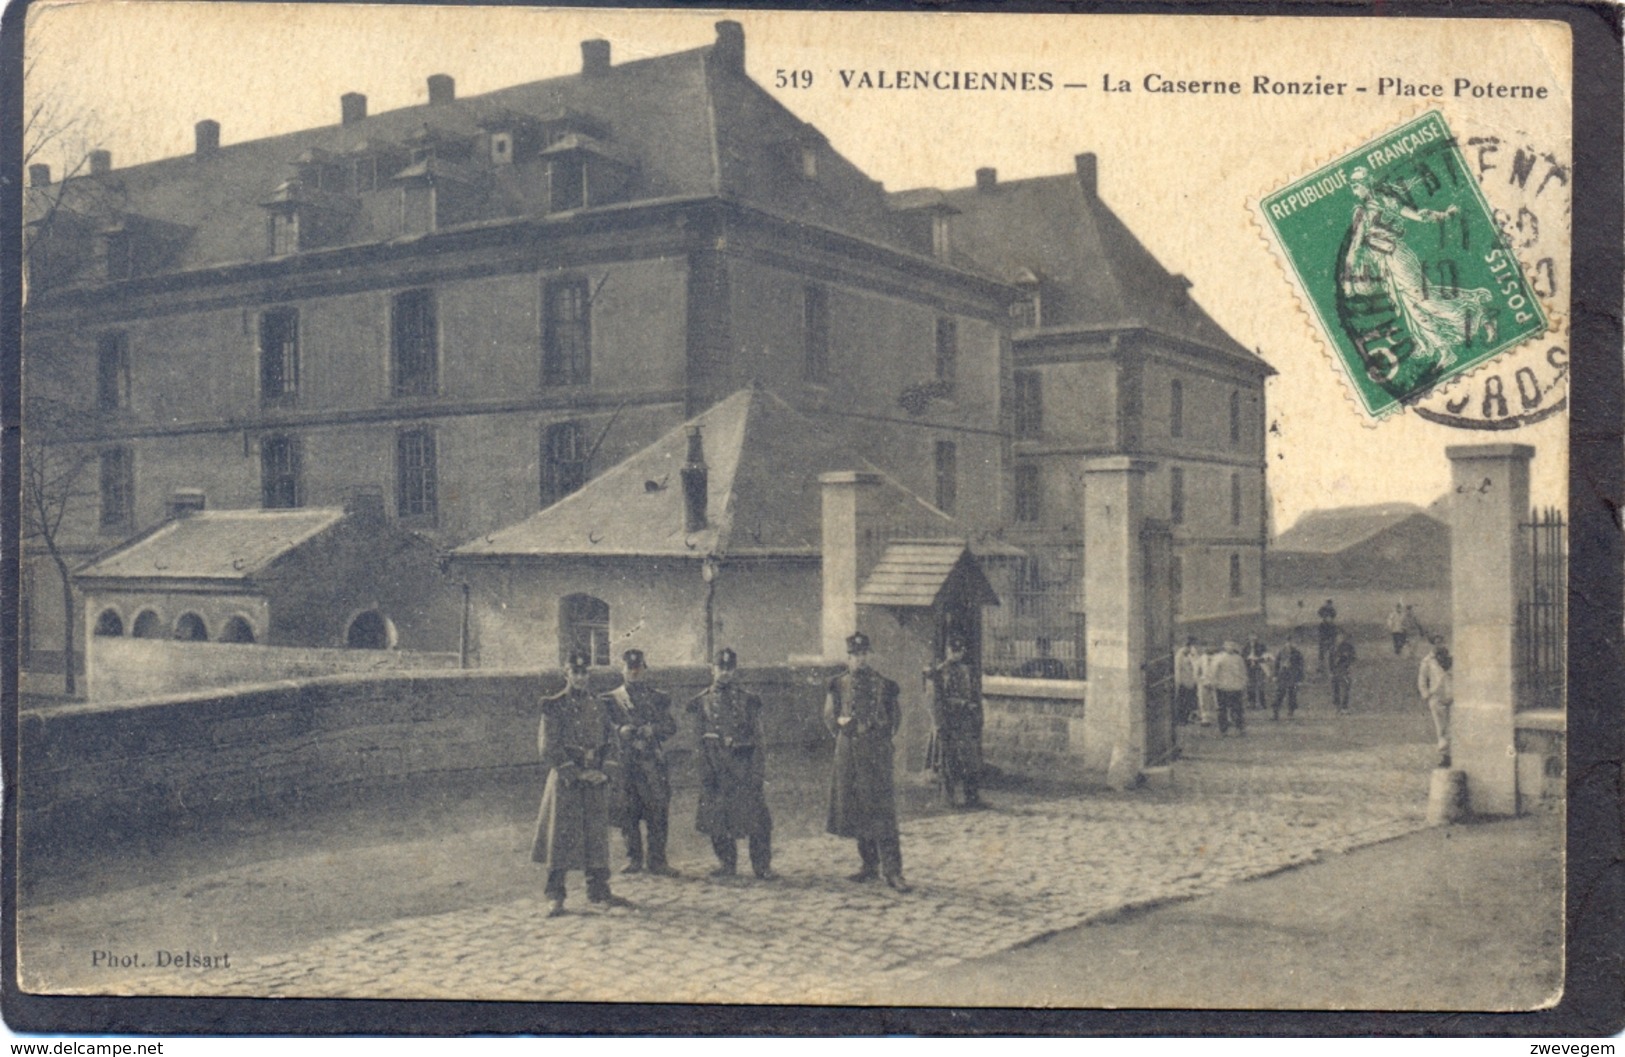 <b>fig.3 </b> Valenciennes. La caserne Ronzier, place Poterne</i>